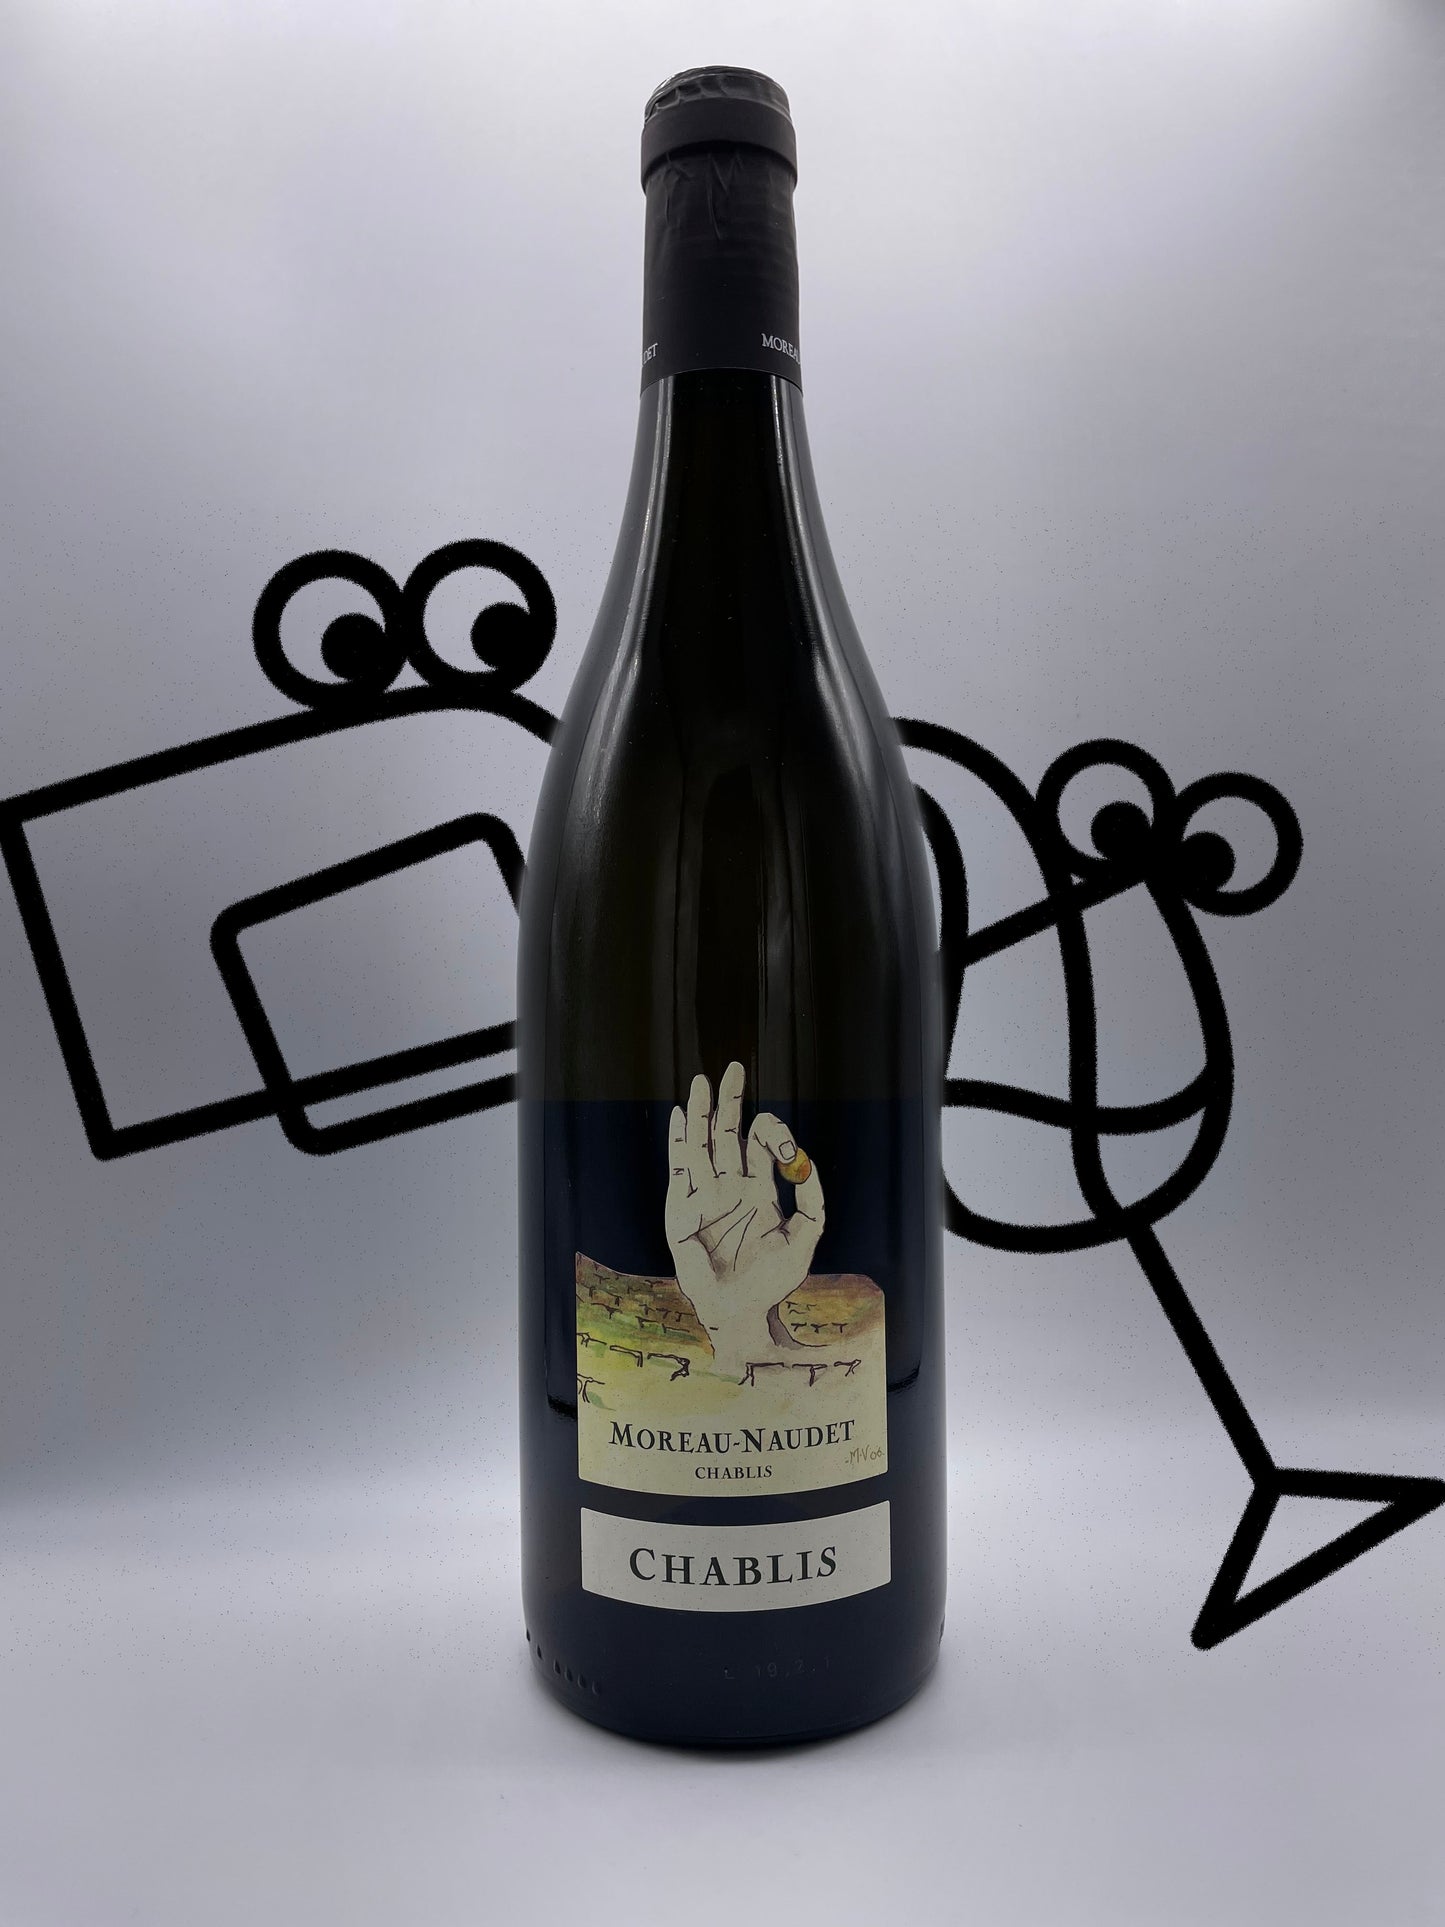 Moreau-Naudet Chablis France Williston Park Wines